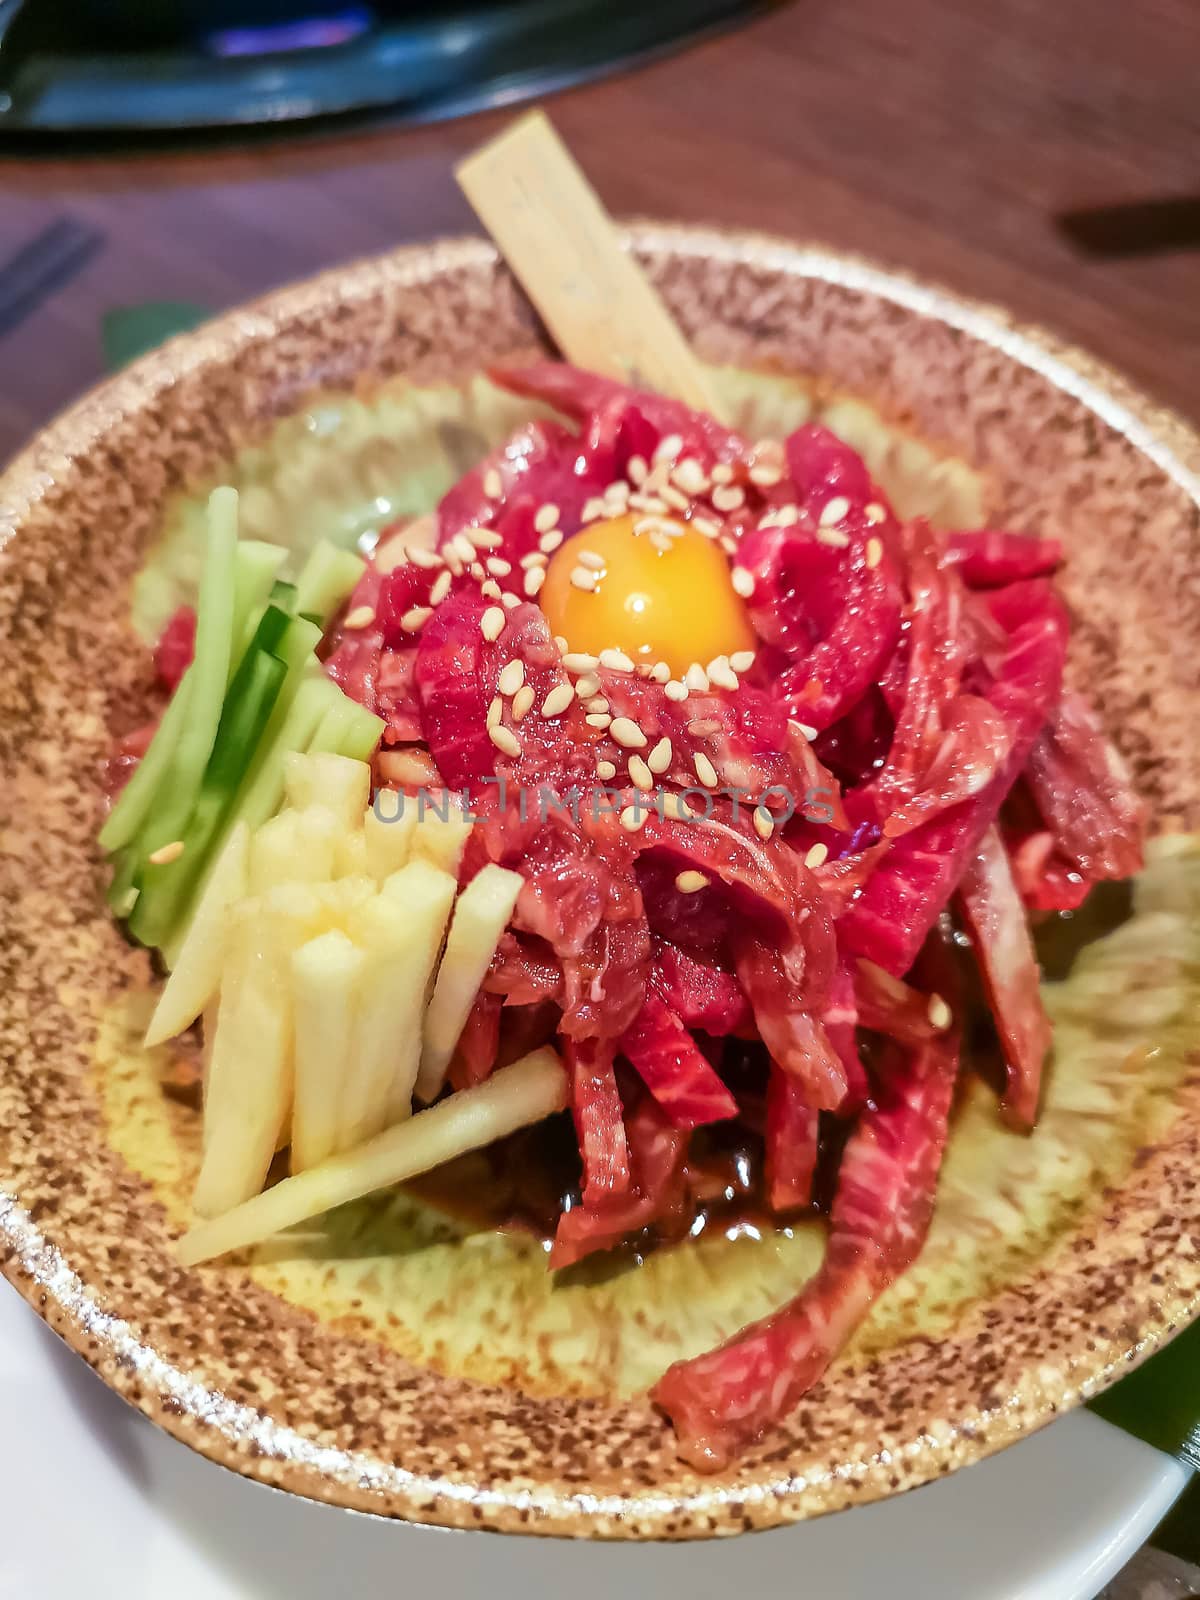 Okinawa style local beef dish in Naha, Japan